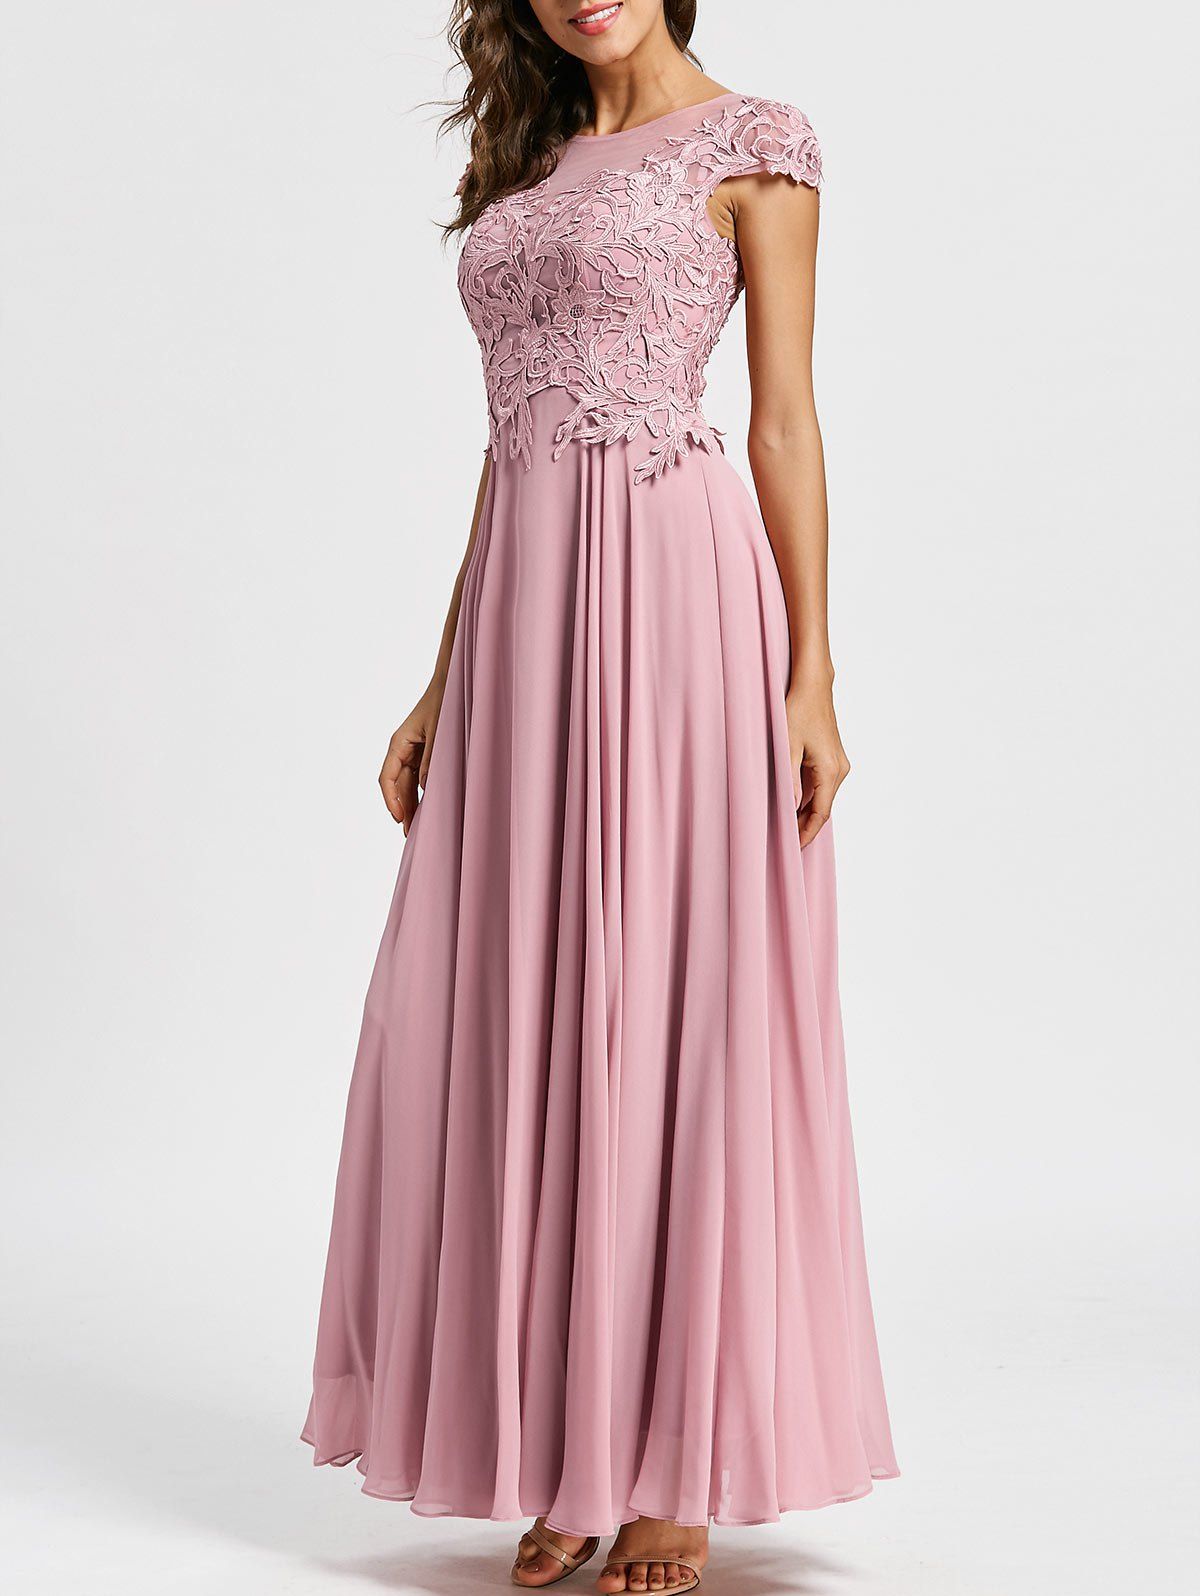 [37% OFF] Floral Applique Formal Maxi Prom Evening Dress | Rosegal